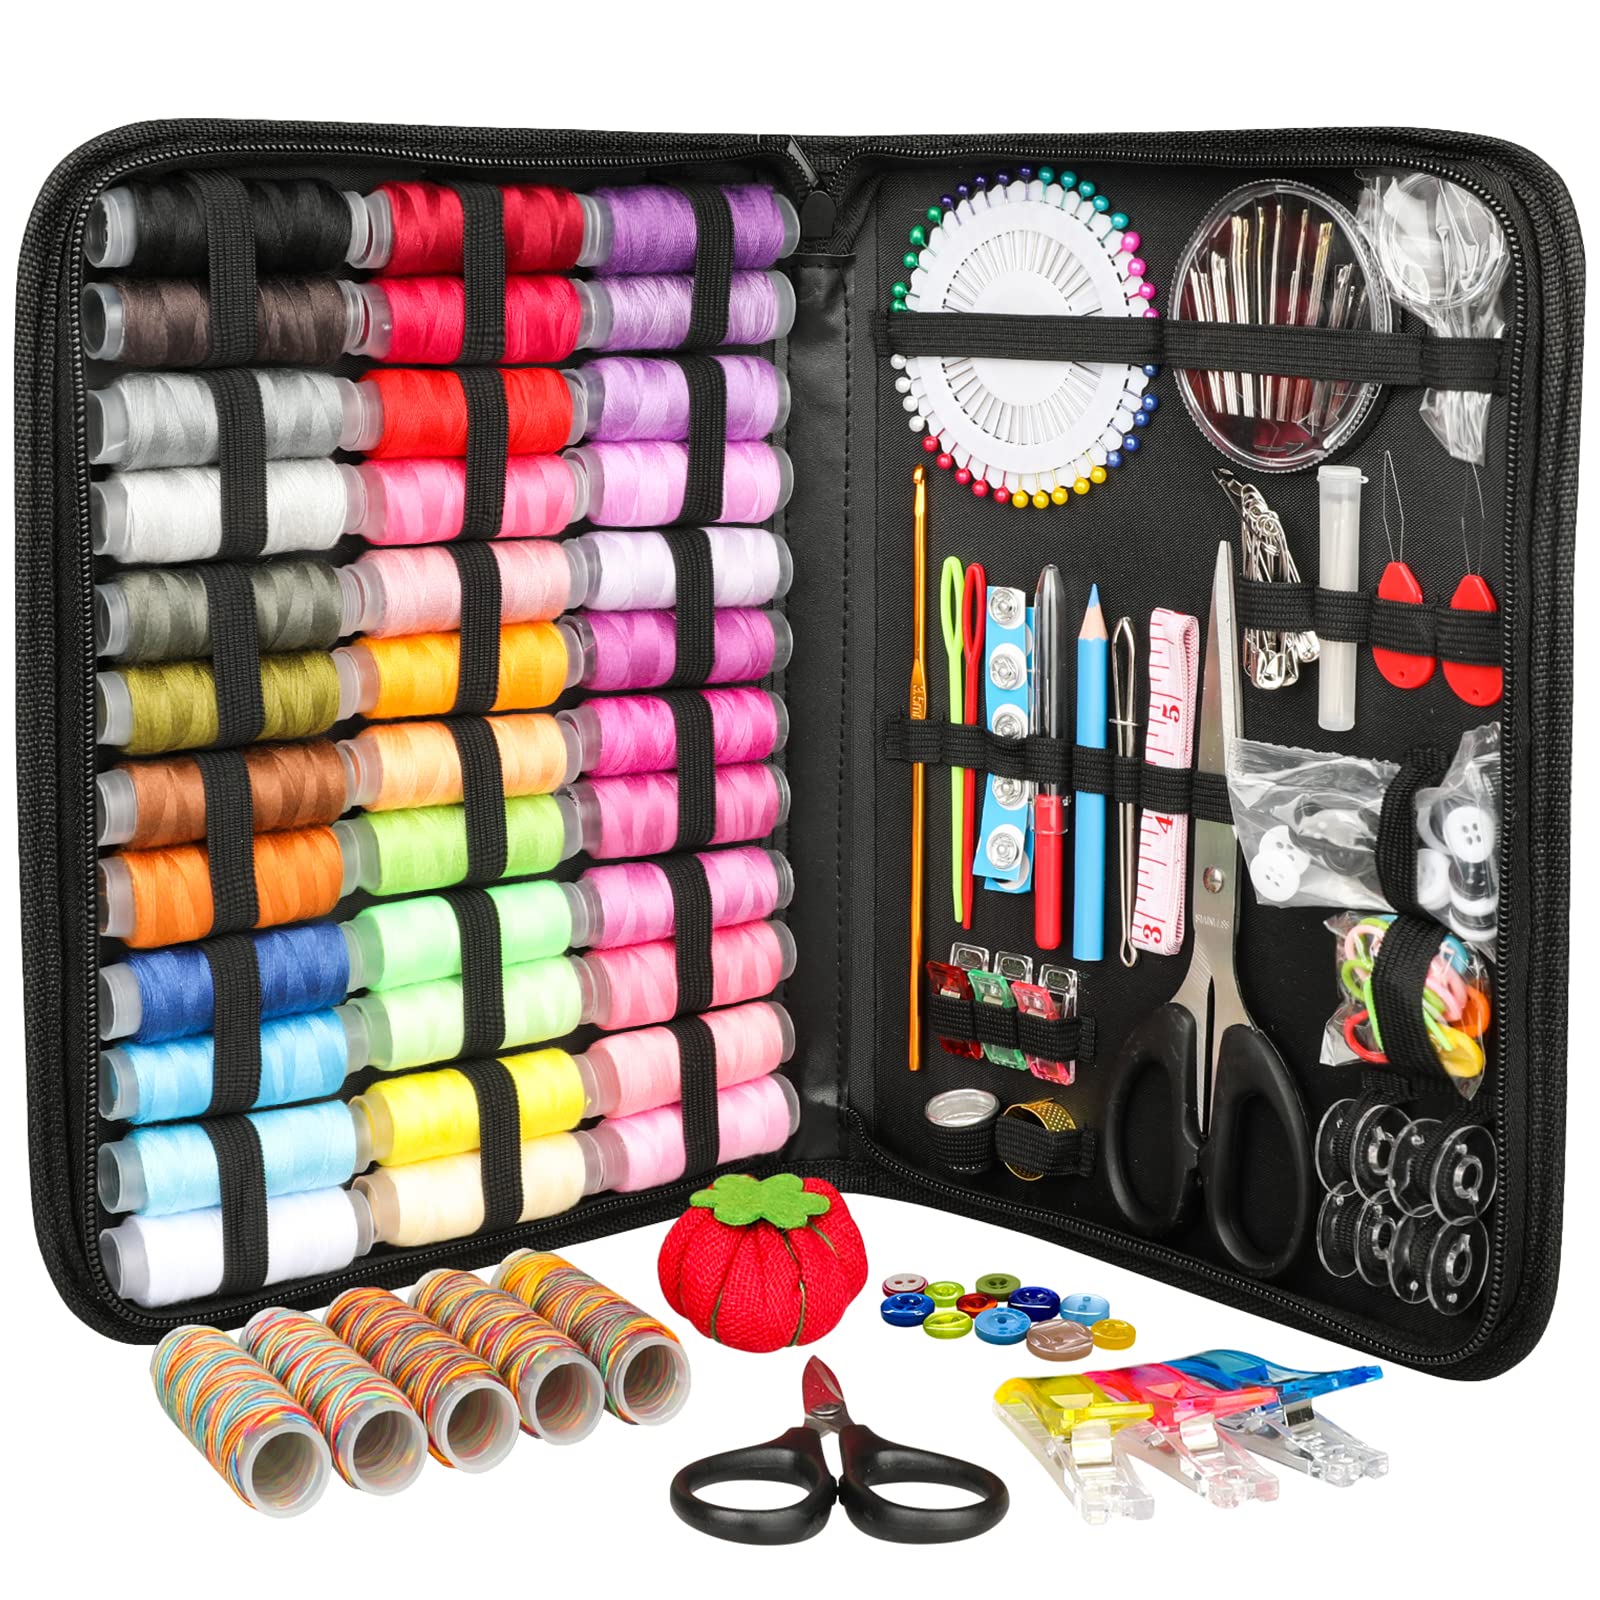 Sewing Kits DIY Travel Embroidery Sewing Box Needles Thread